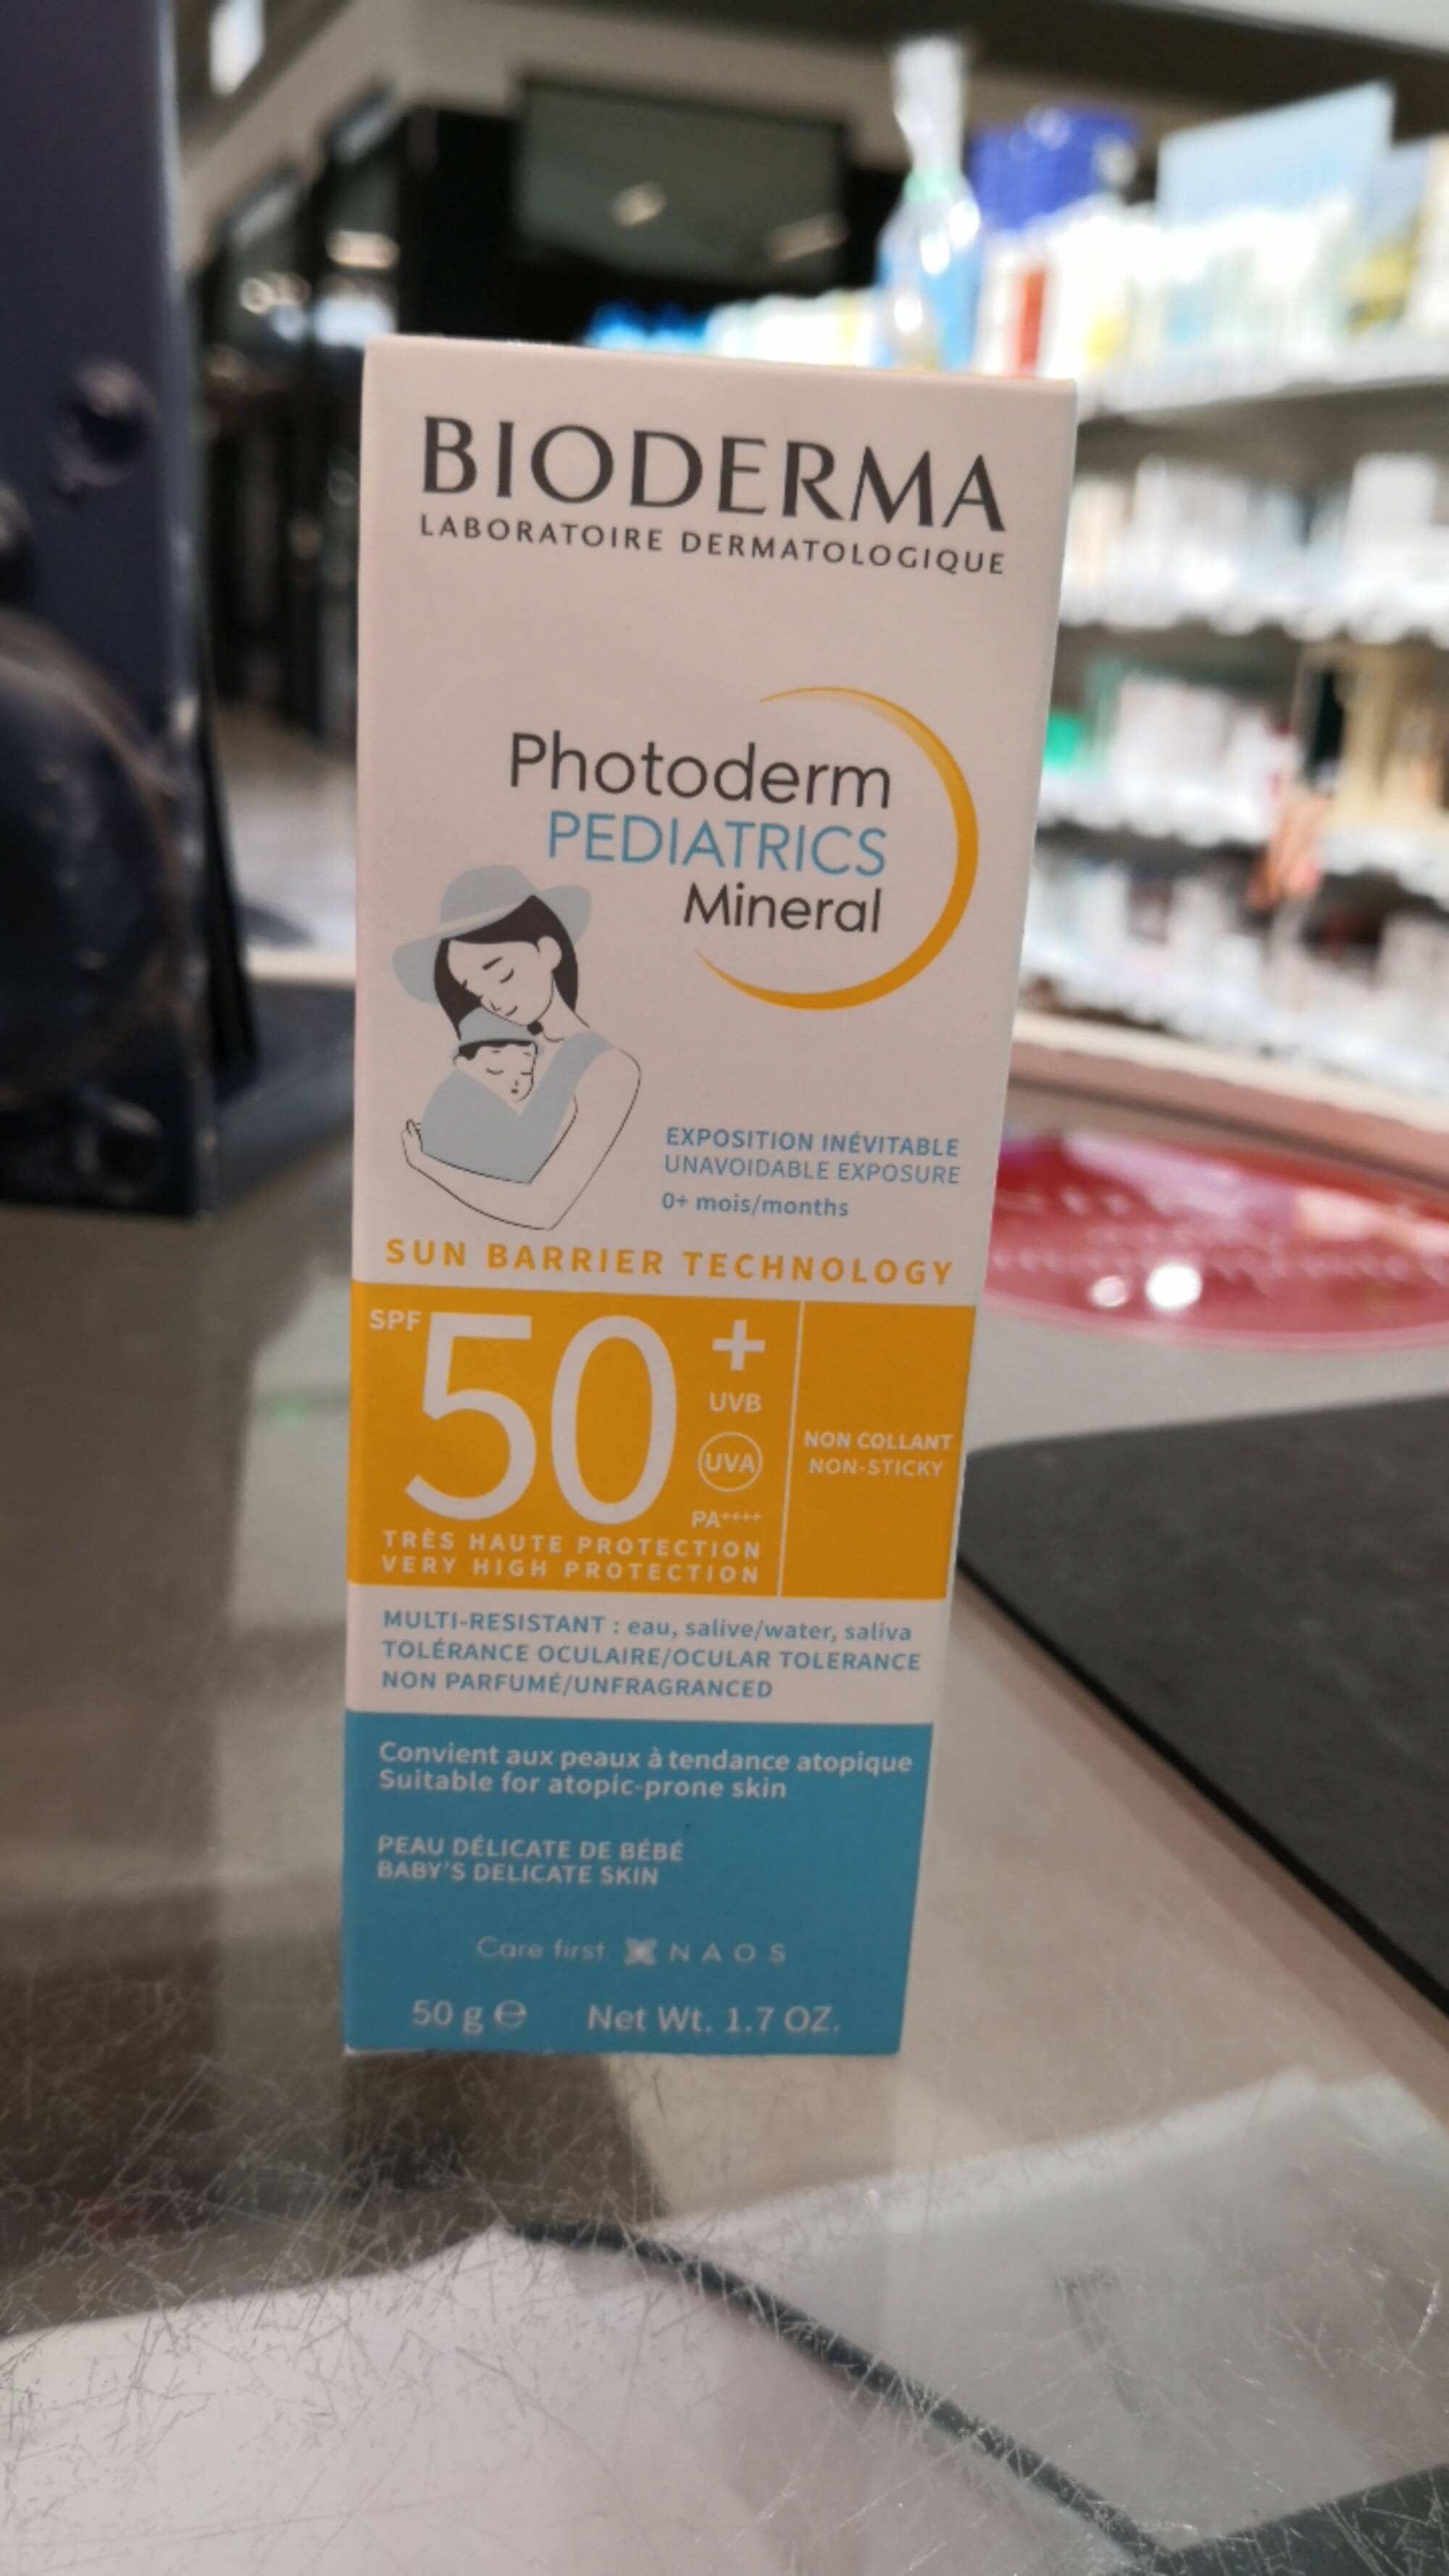 BIODERMA - Photoderm pediatrics mineral - Sun barrier SPF 50